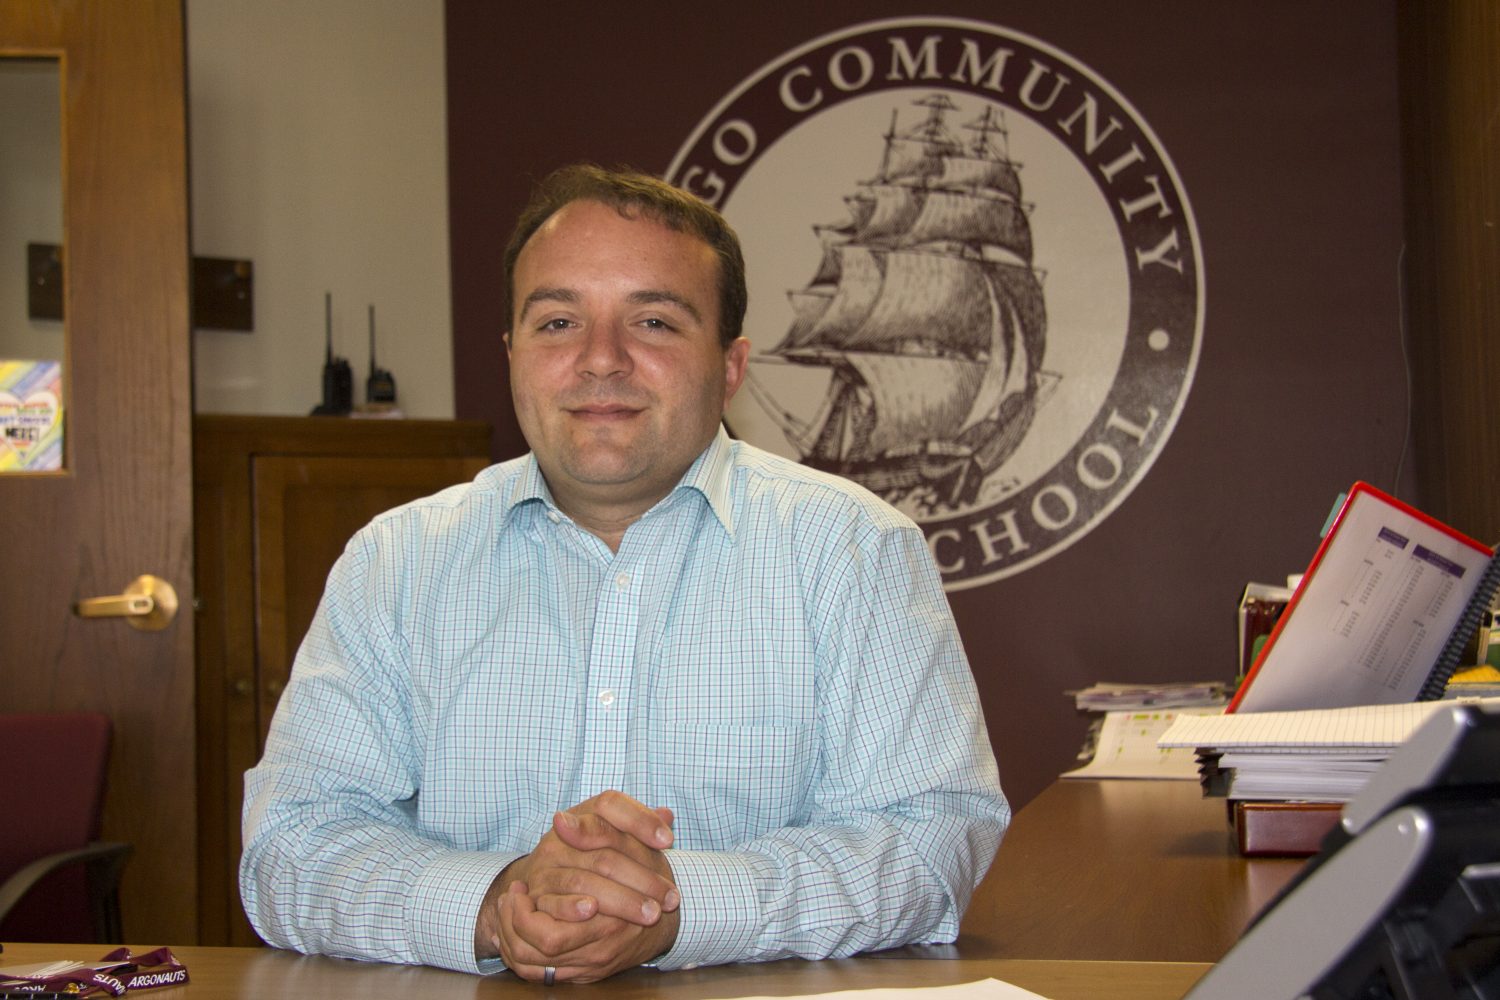 Argo Community High School Principal, Dr. Covino, at his desk.